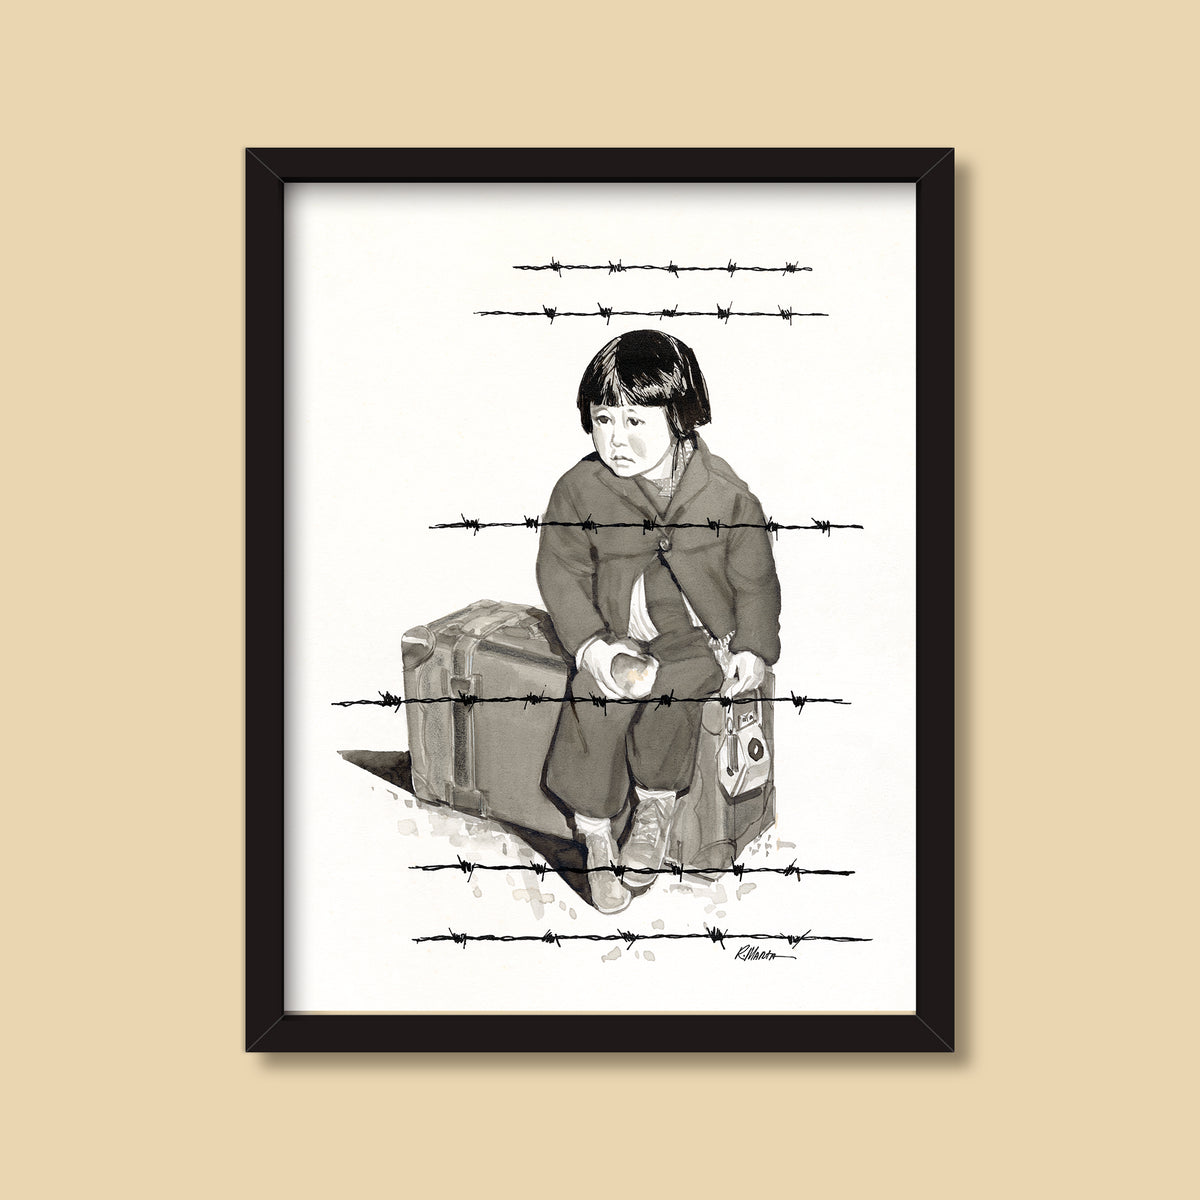 Move to Manzanar — vintage illustration by Ray Marta